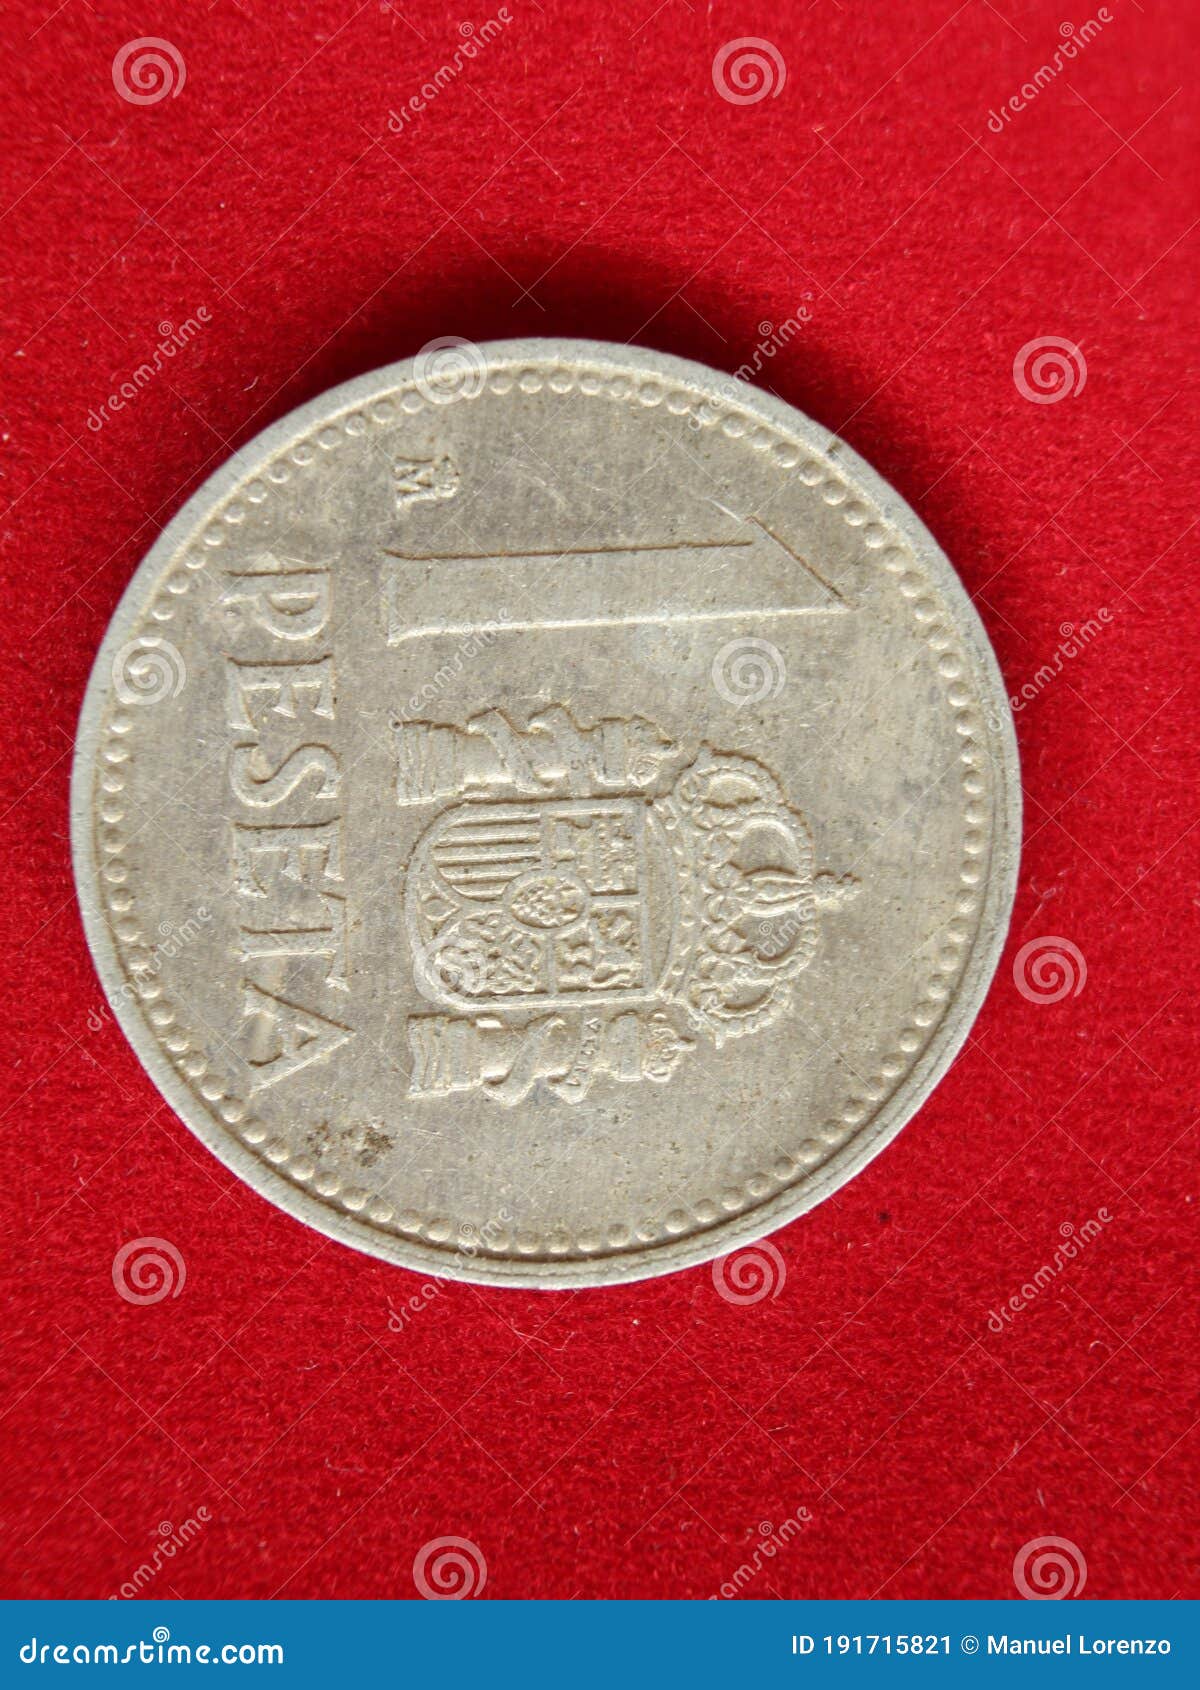 coins money value metal round treasure state